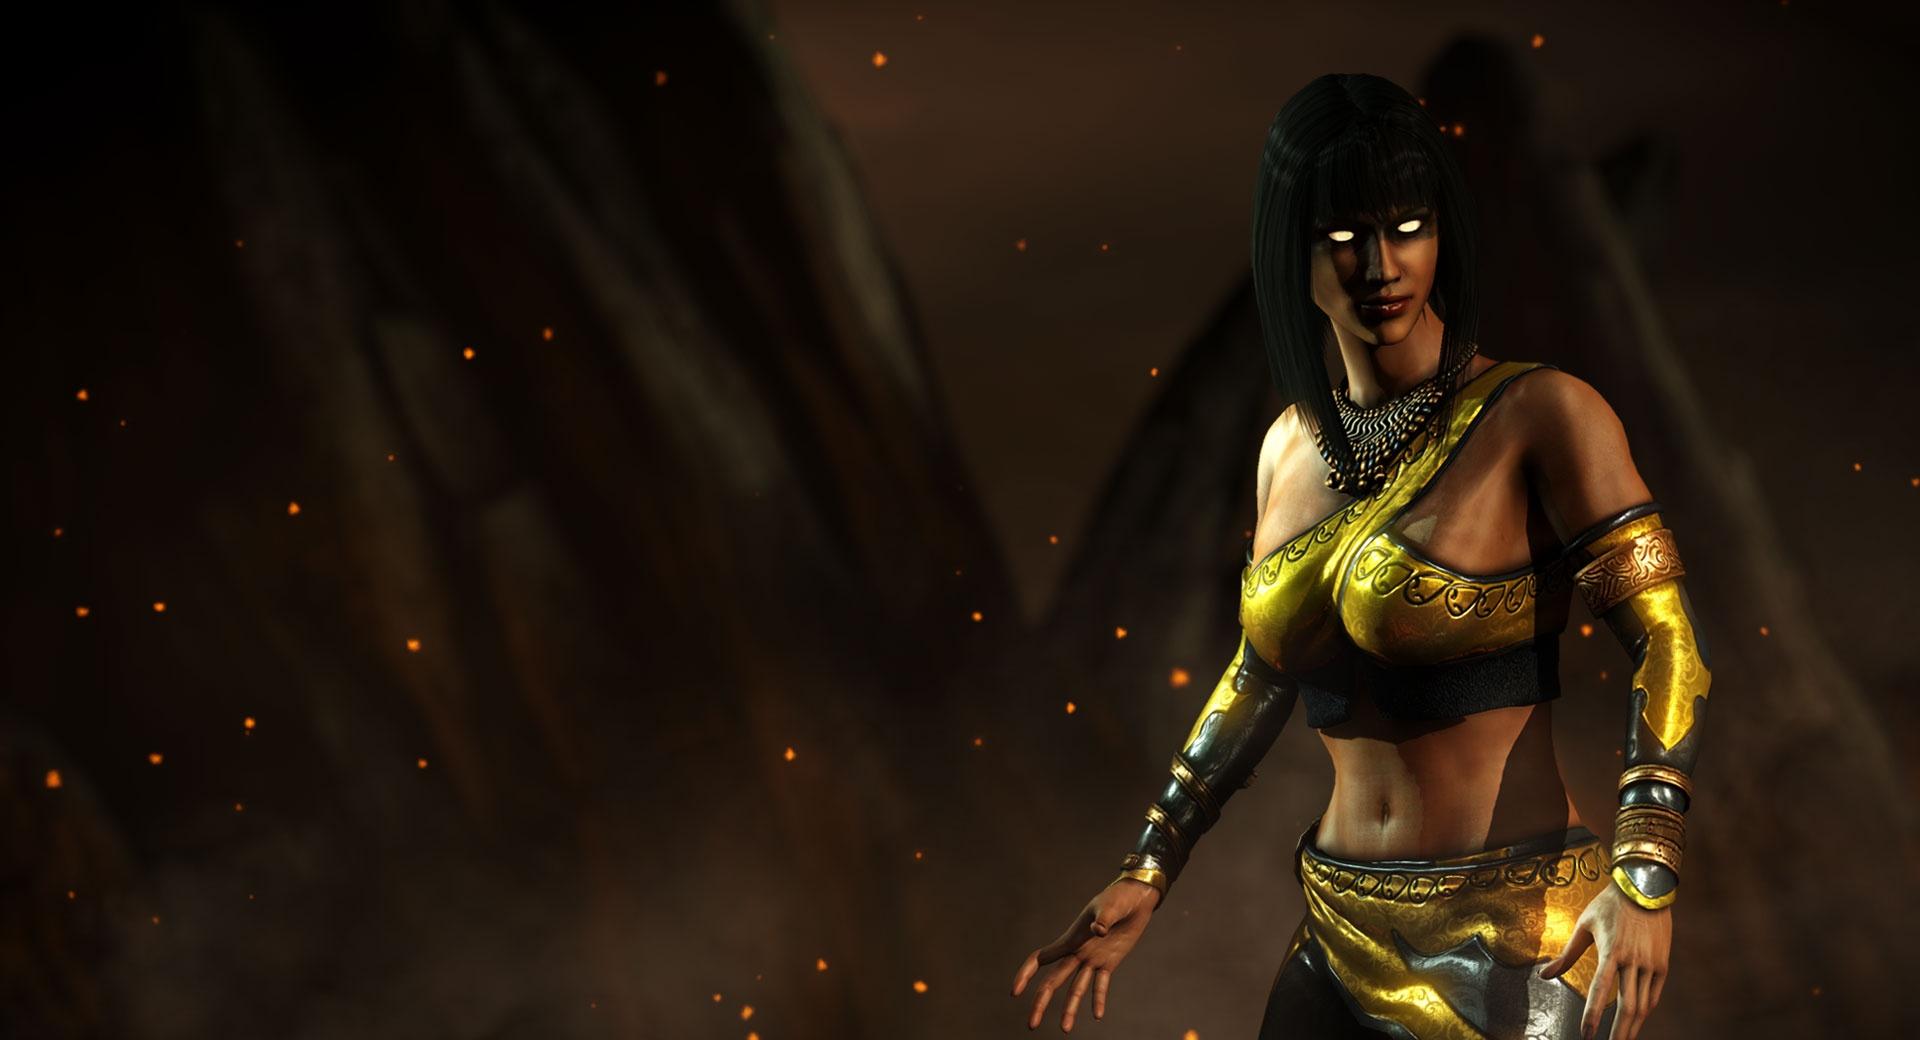 Mortal Kombat X Tanya at 1280 x 960 size wallpapers HD quality